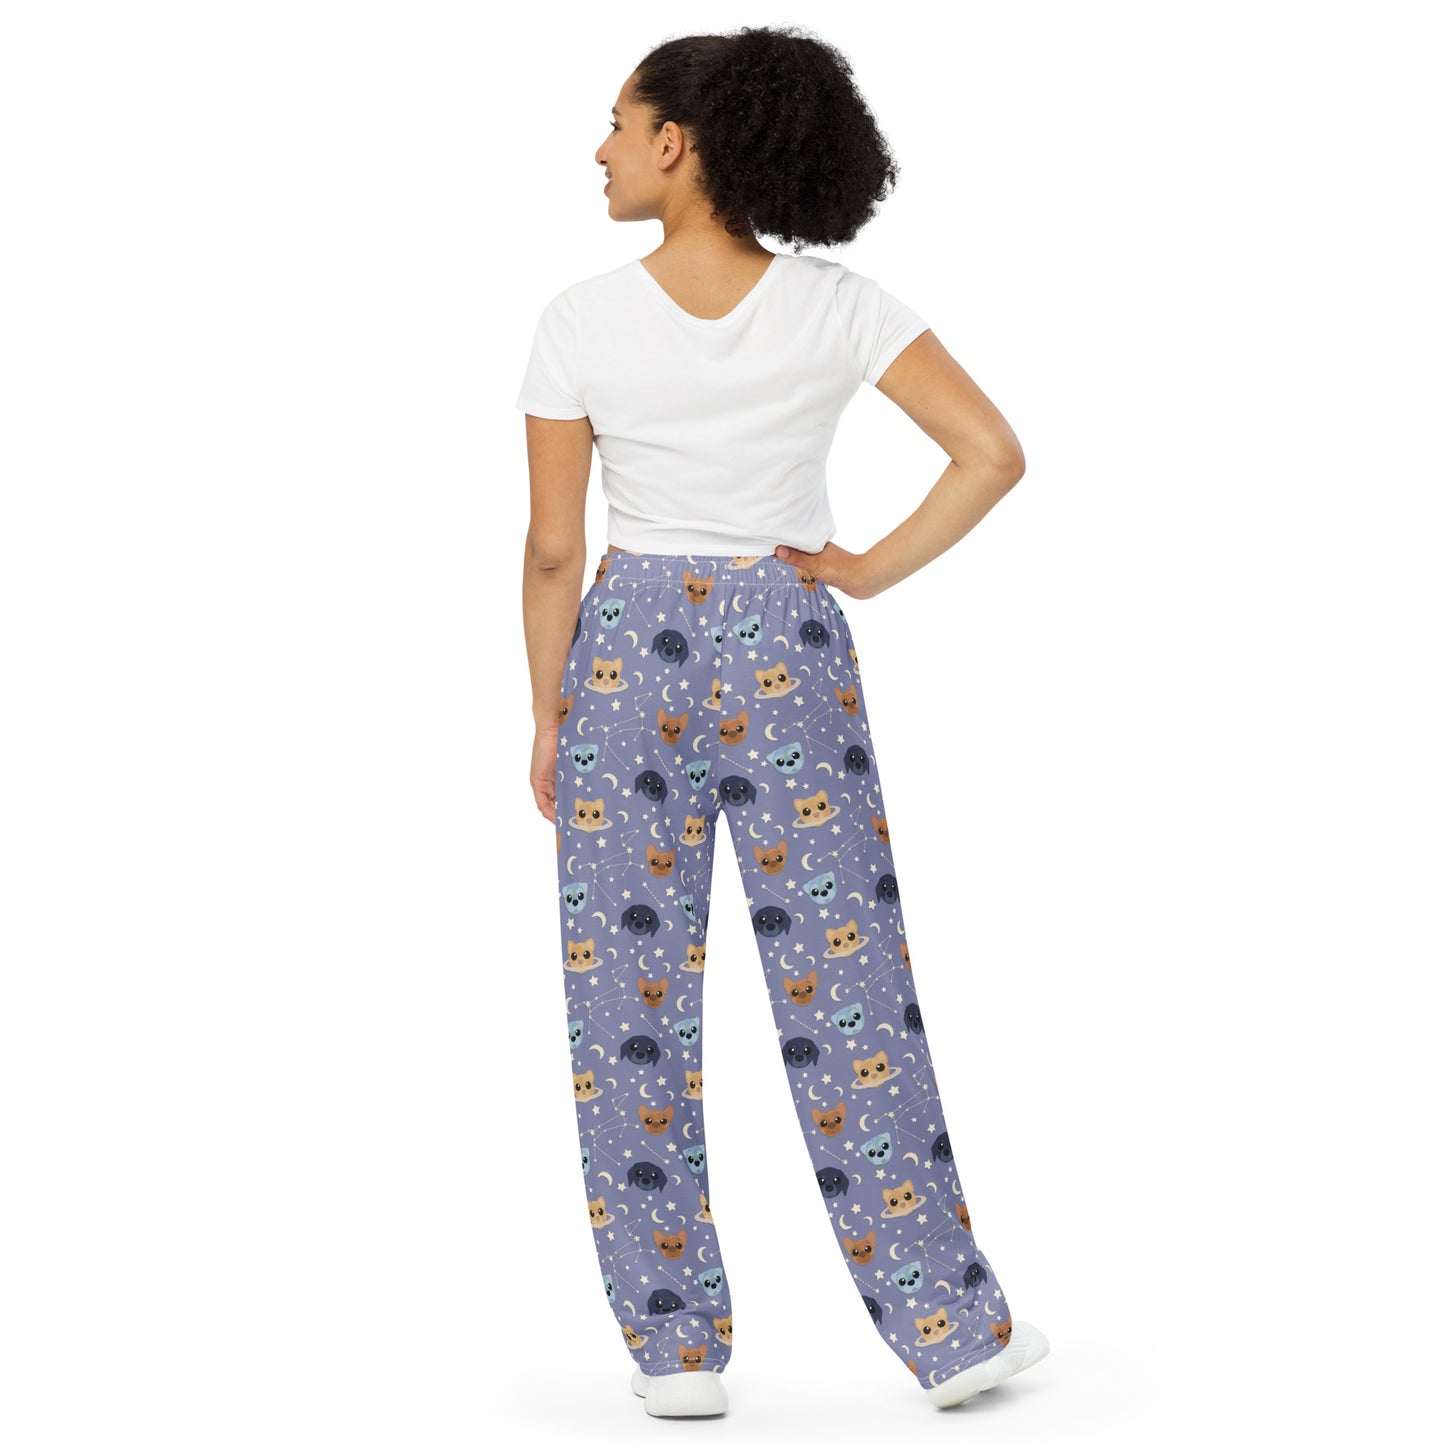 Astro-Mutt Unisex Pajama Pants